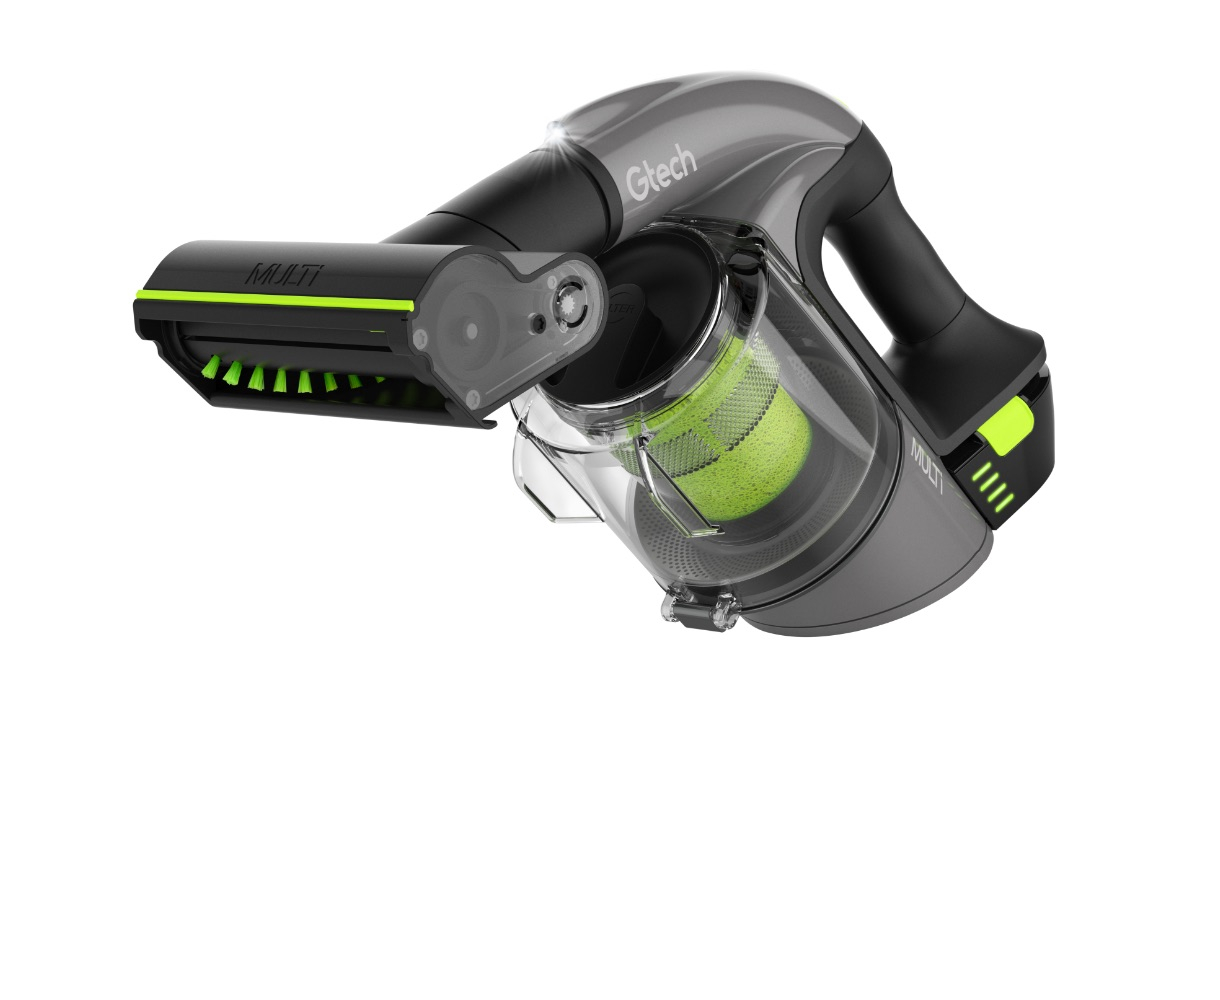 Multi MK2 Cordless Handheld Vacuum